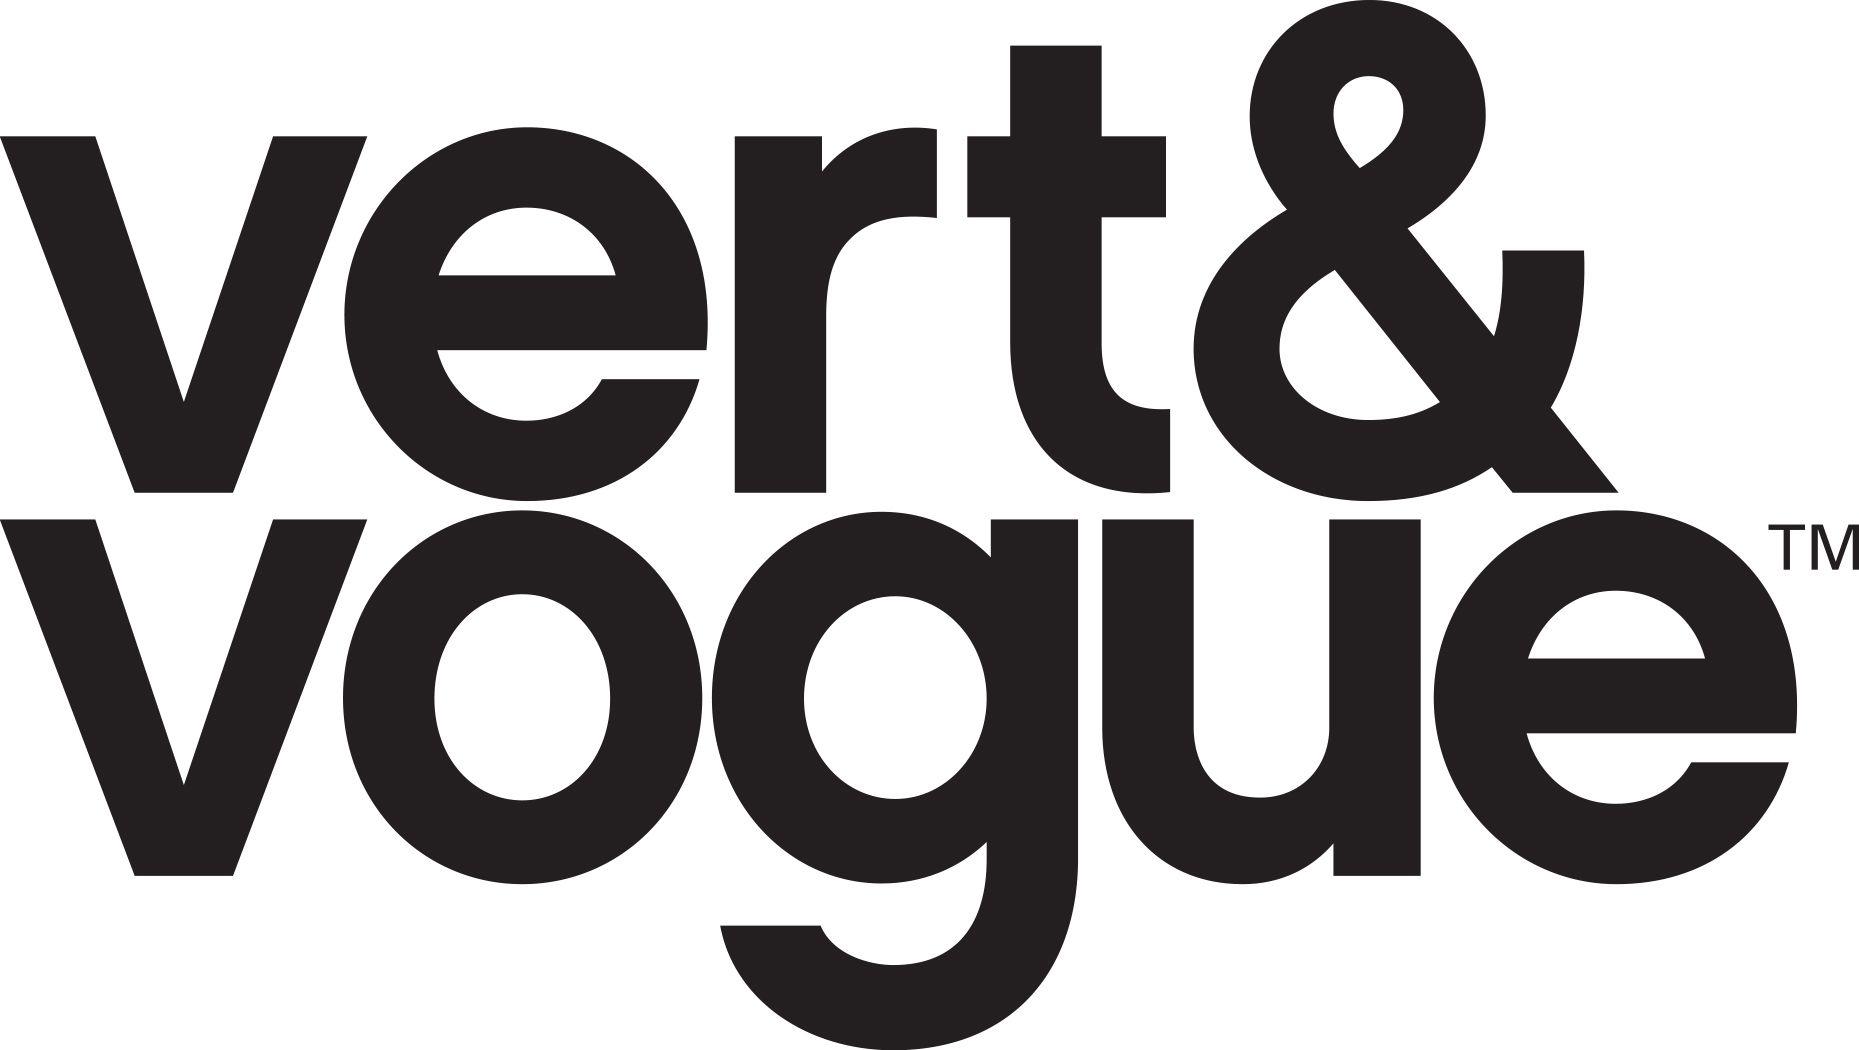 Vogue White Logo - vert vogue logo - eps - SEEDS